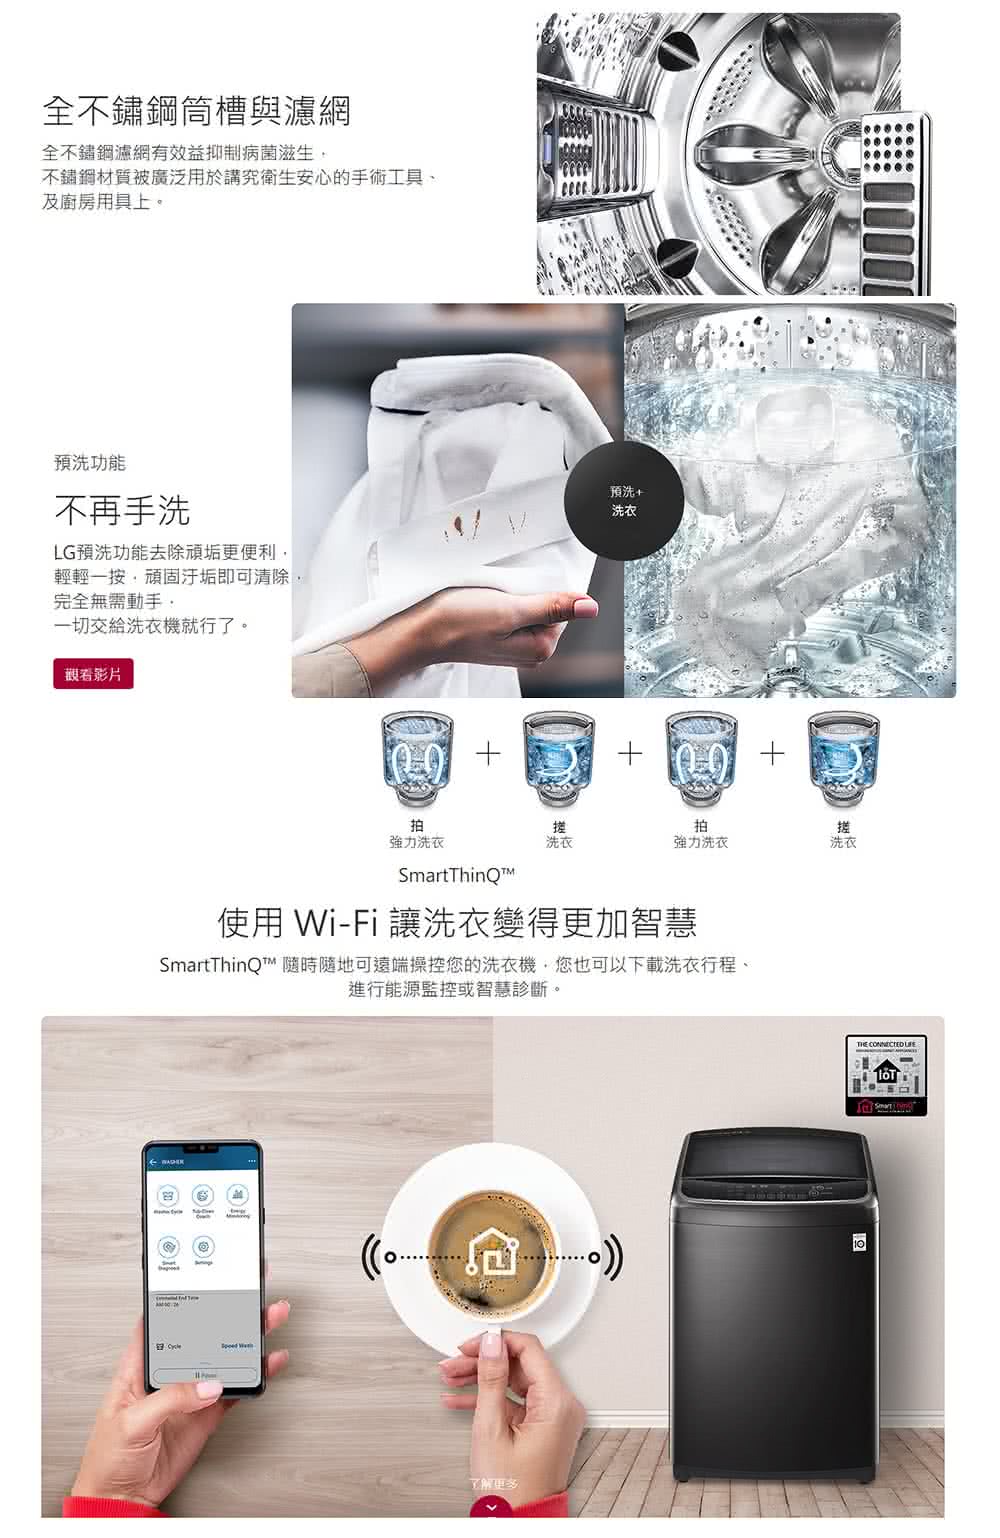 SmartThinQ 隨時隨地可遠端操控您的洗衣機,您也可以下載洗衣行程、